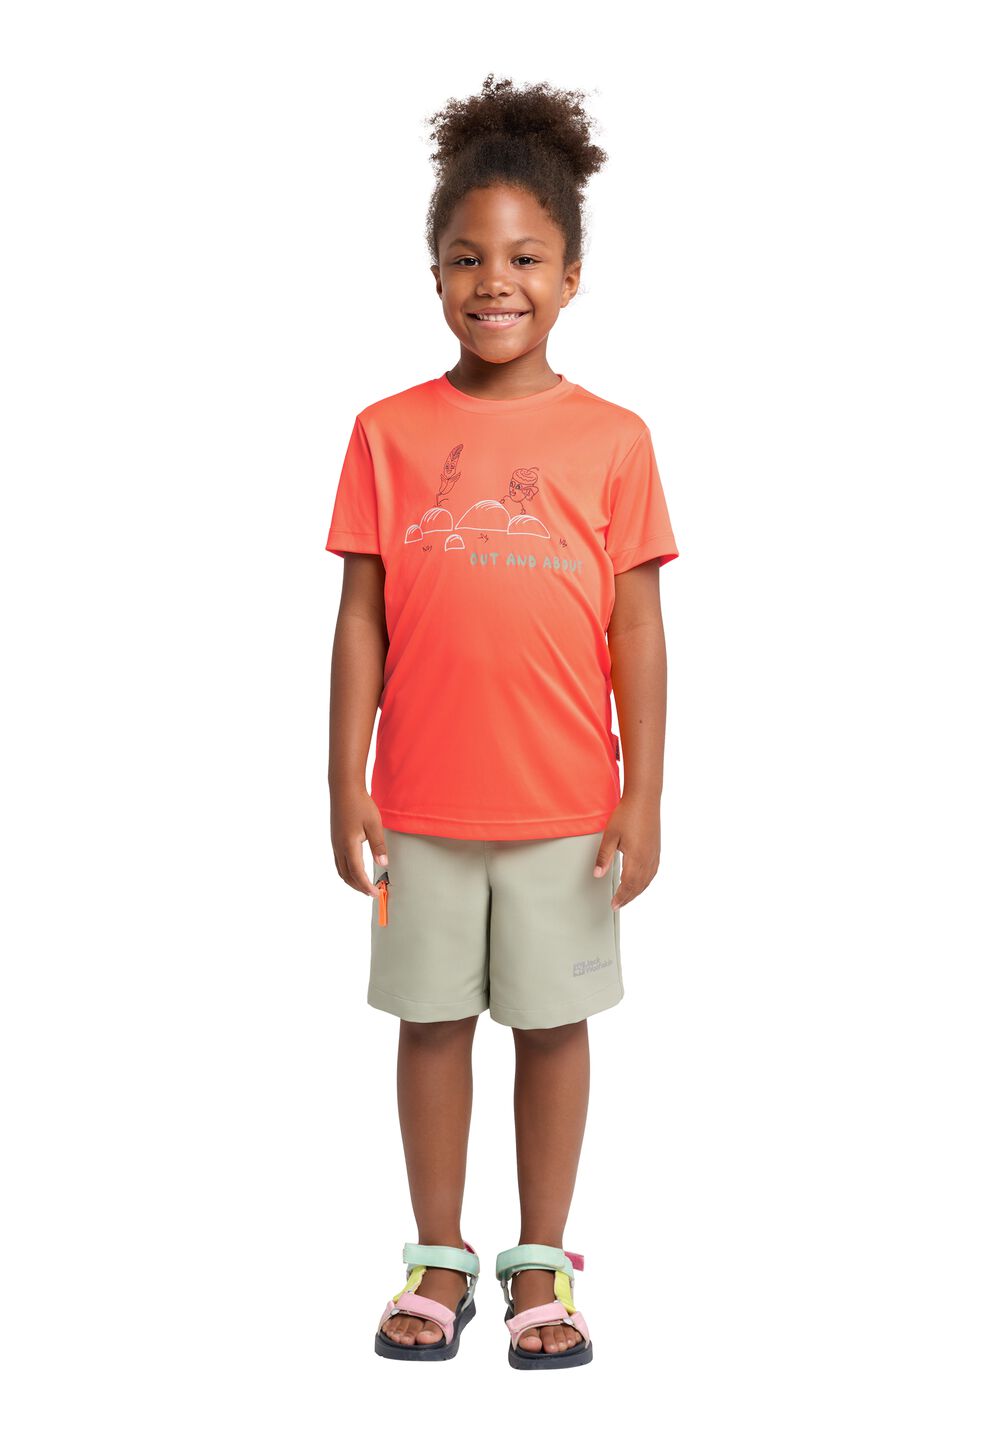 Jack Wolfskin OUT AND About T-Shirt Kids Functioneel shirt Kinderen 128 rood digital orange